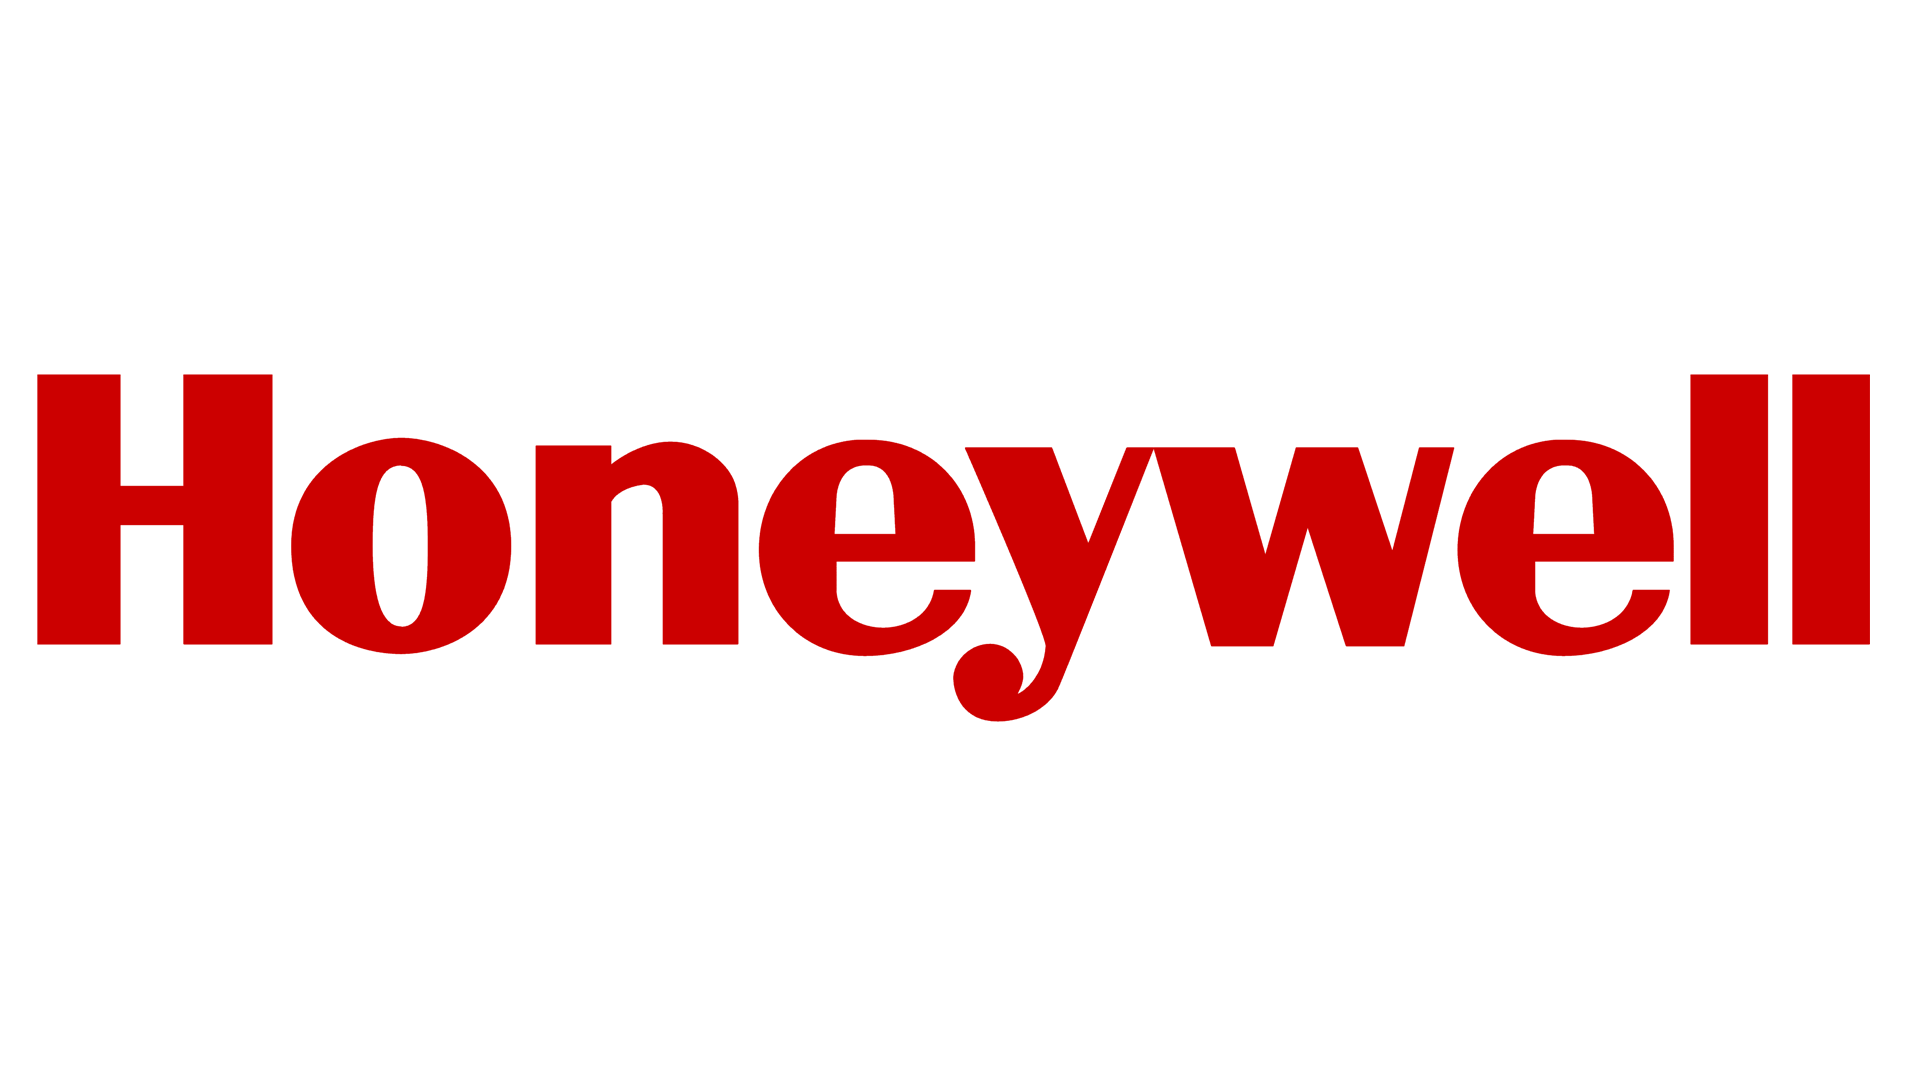 Логотип Honeywell, символ Honeywell, значение, история и эволюция